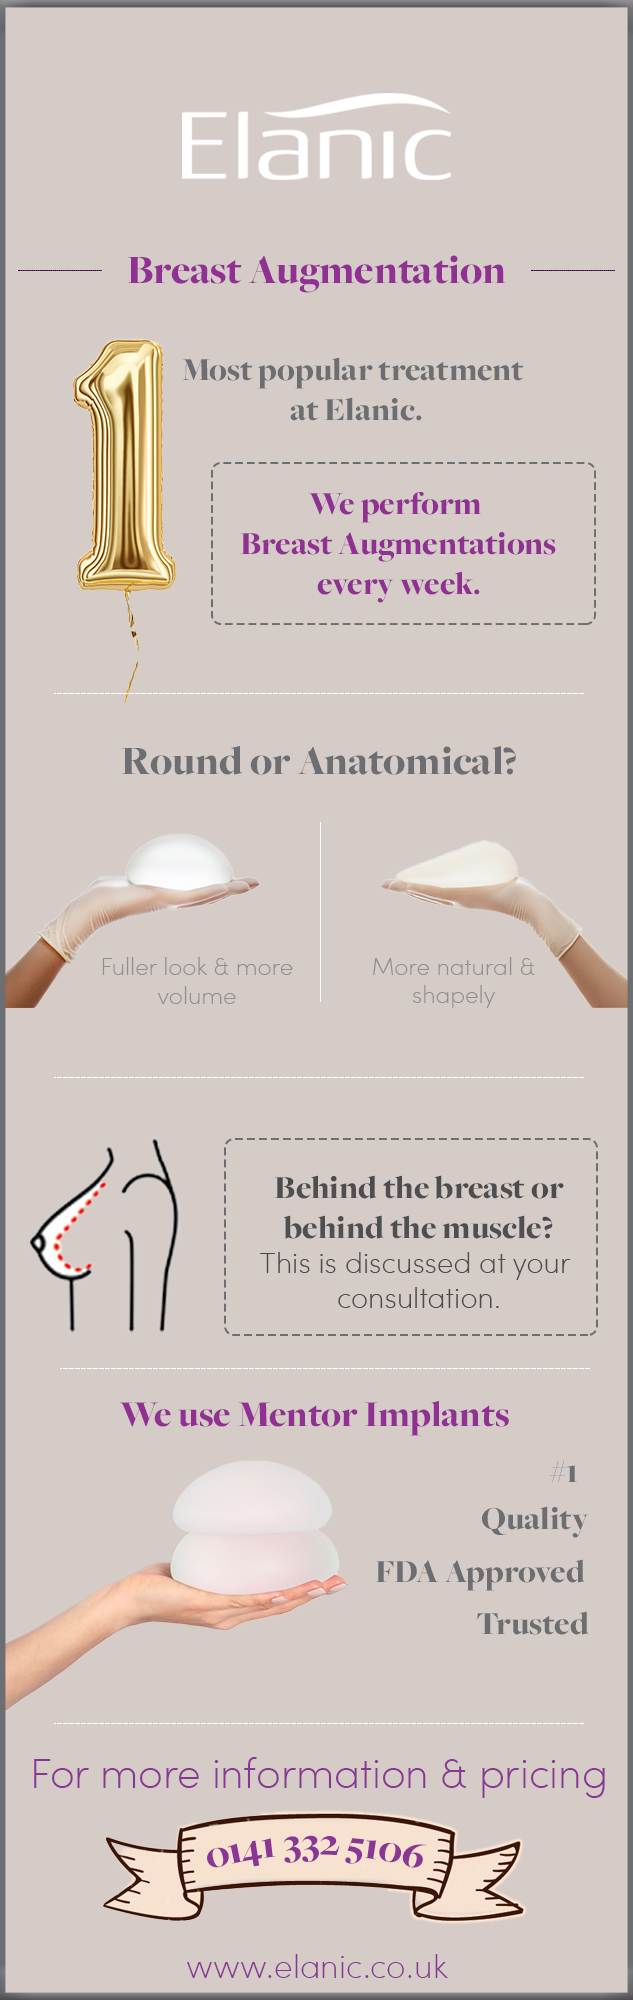 breast augmentation infographic 